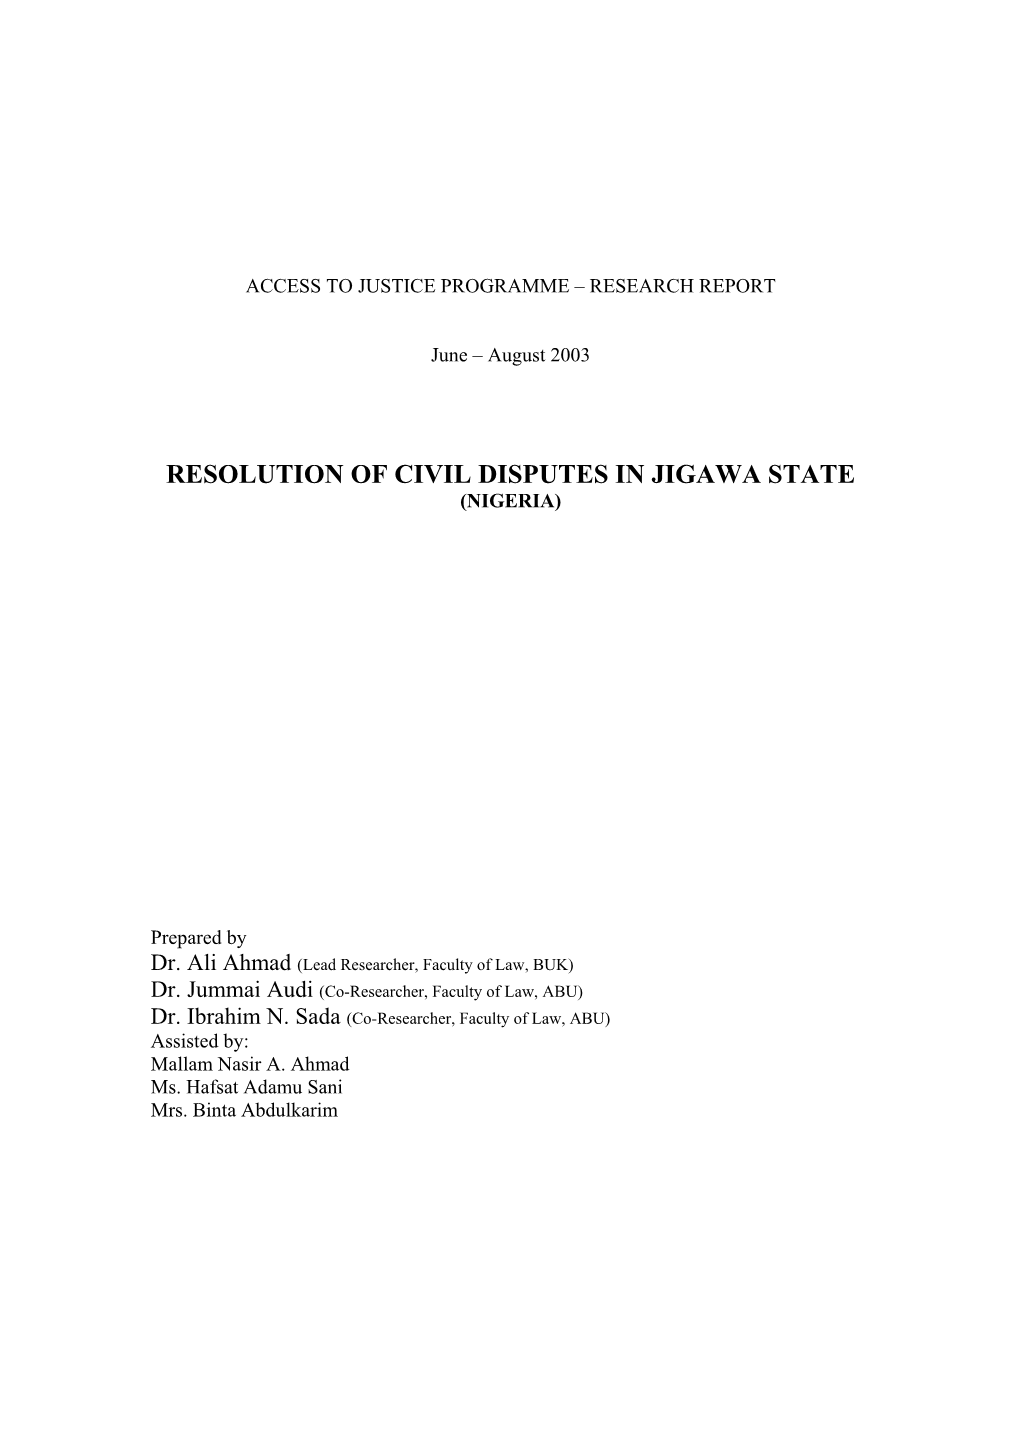 Resolution of Civil Disputes in Jigawa State (Nigeria)